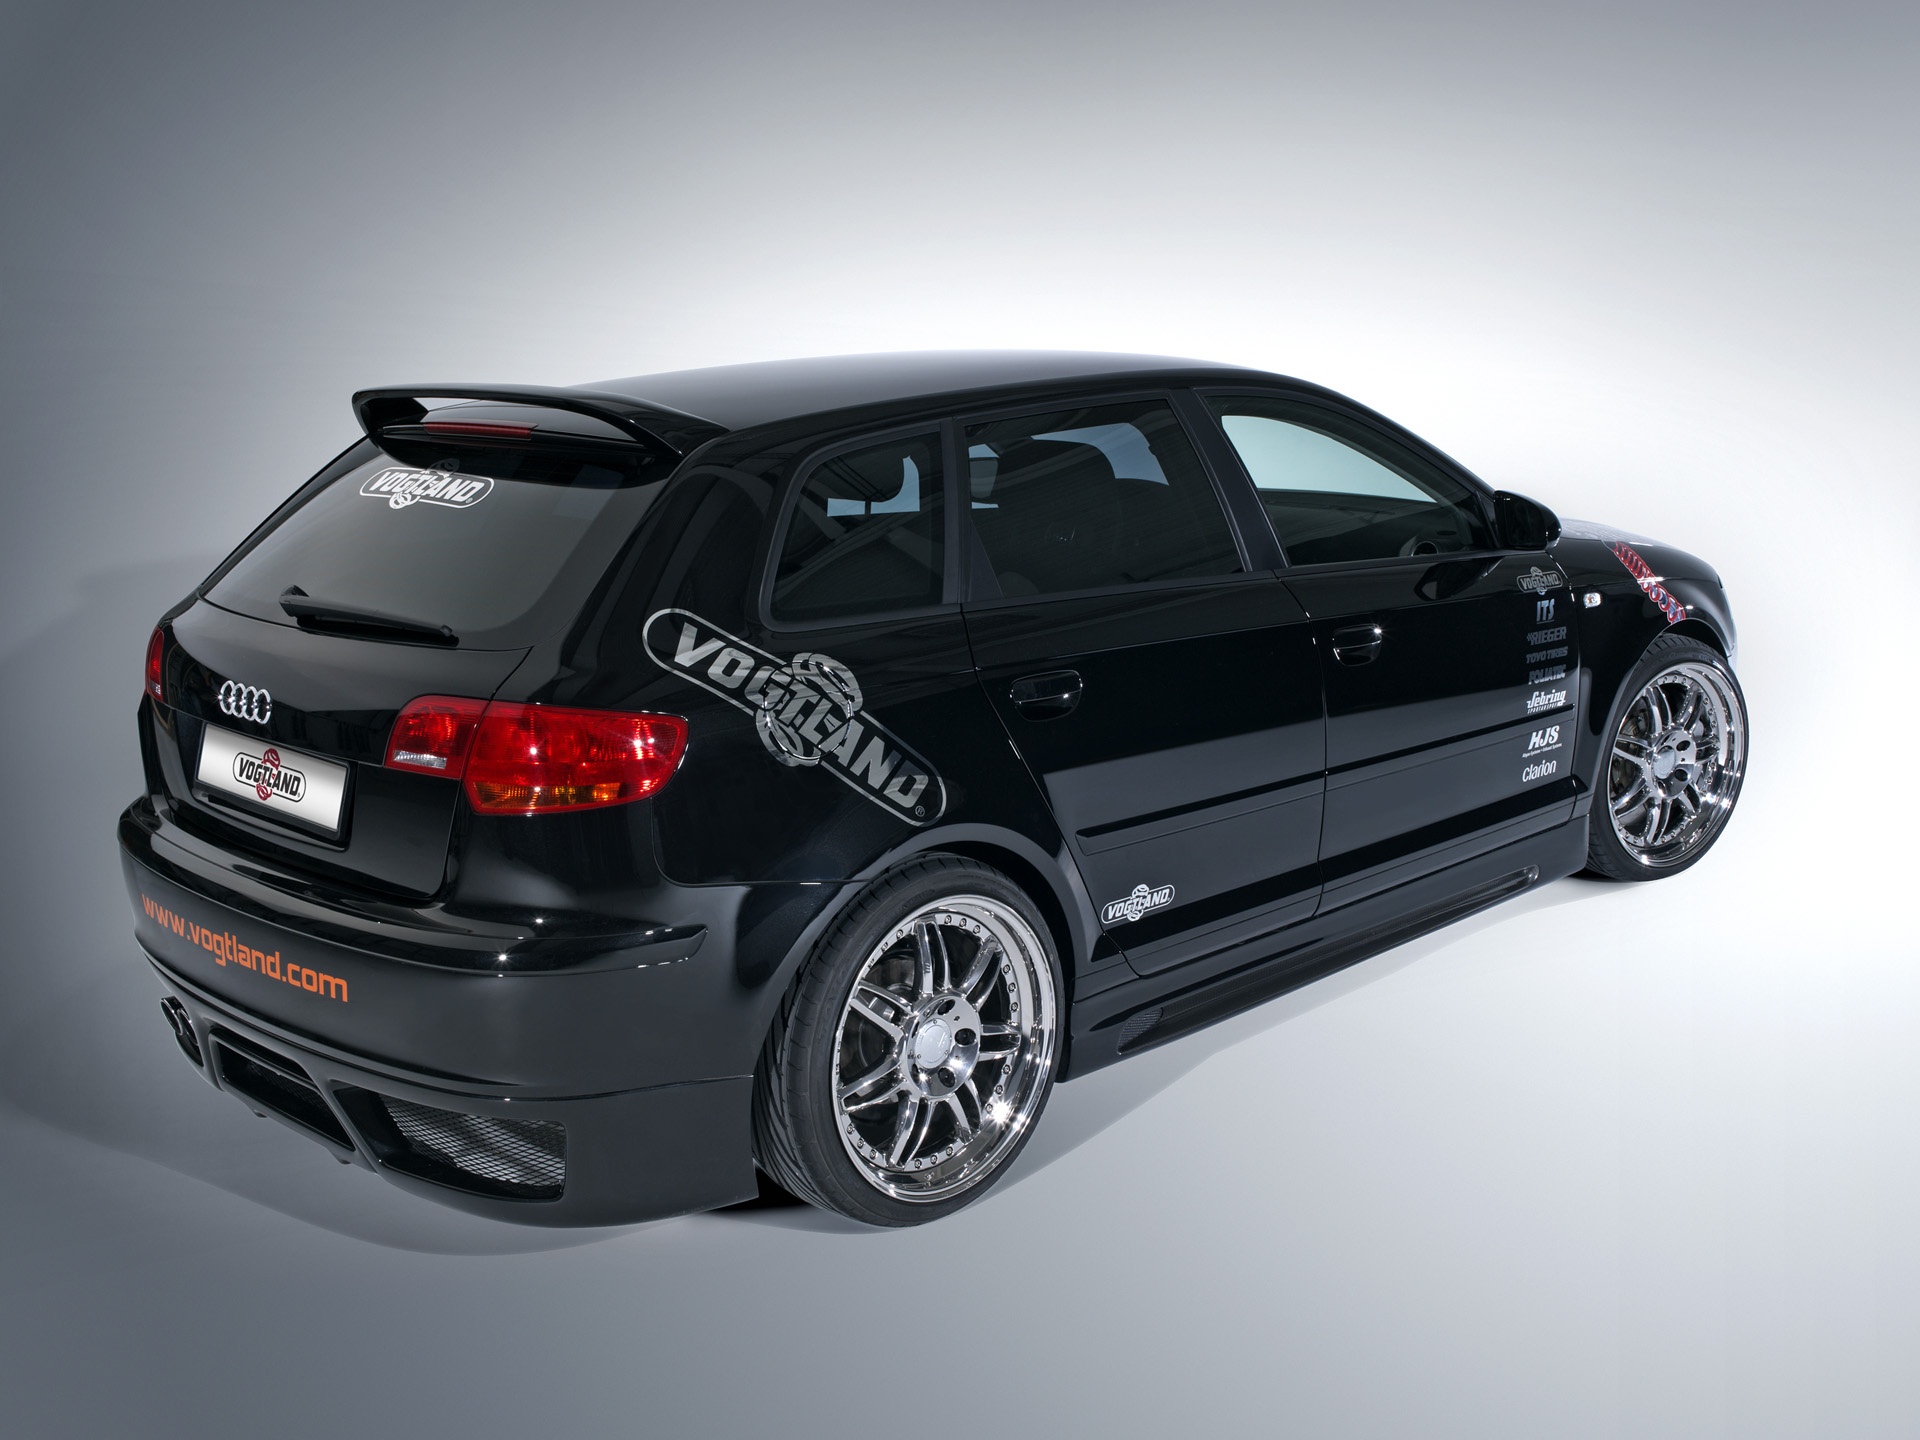 Audi A3 Sportback Wallpaper Stock Photos